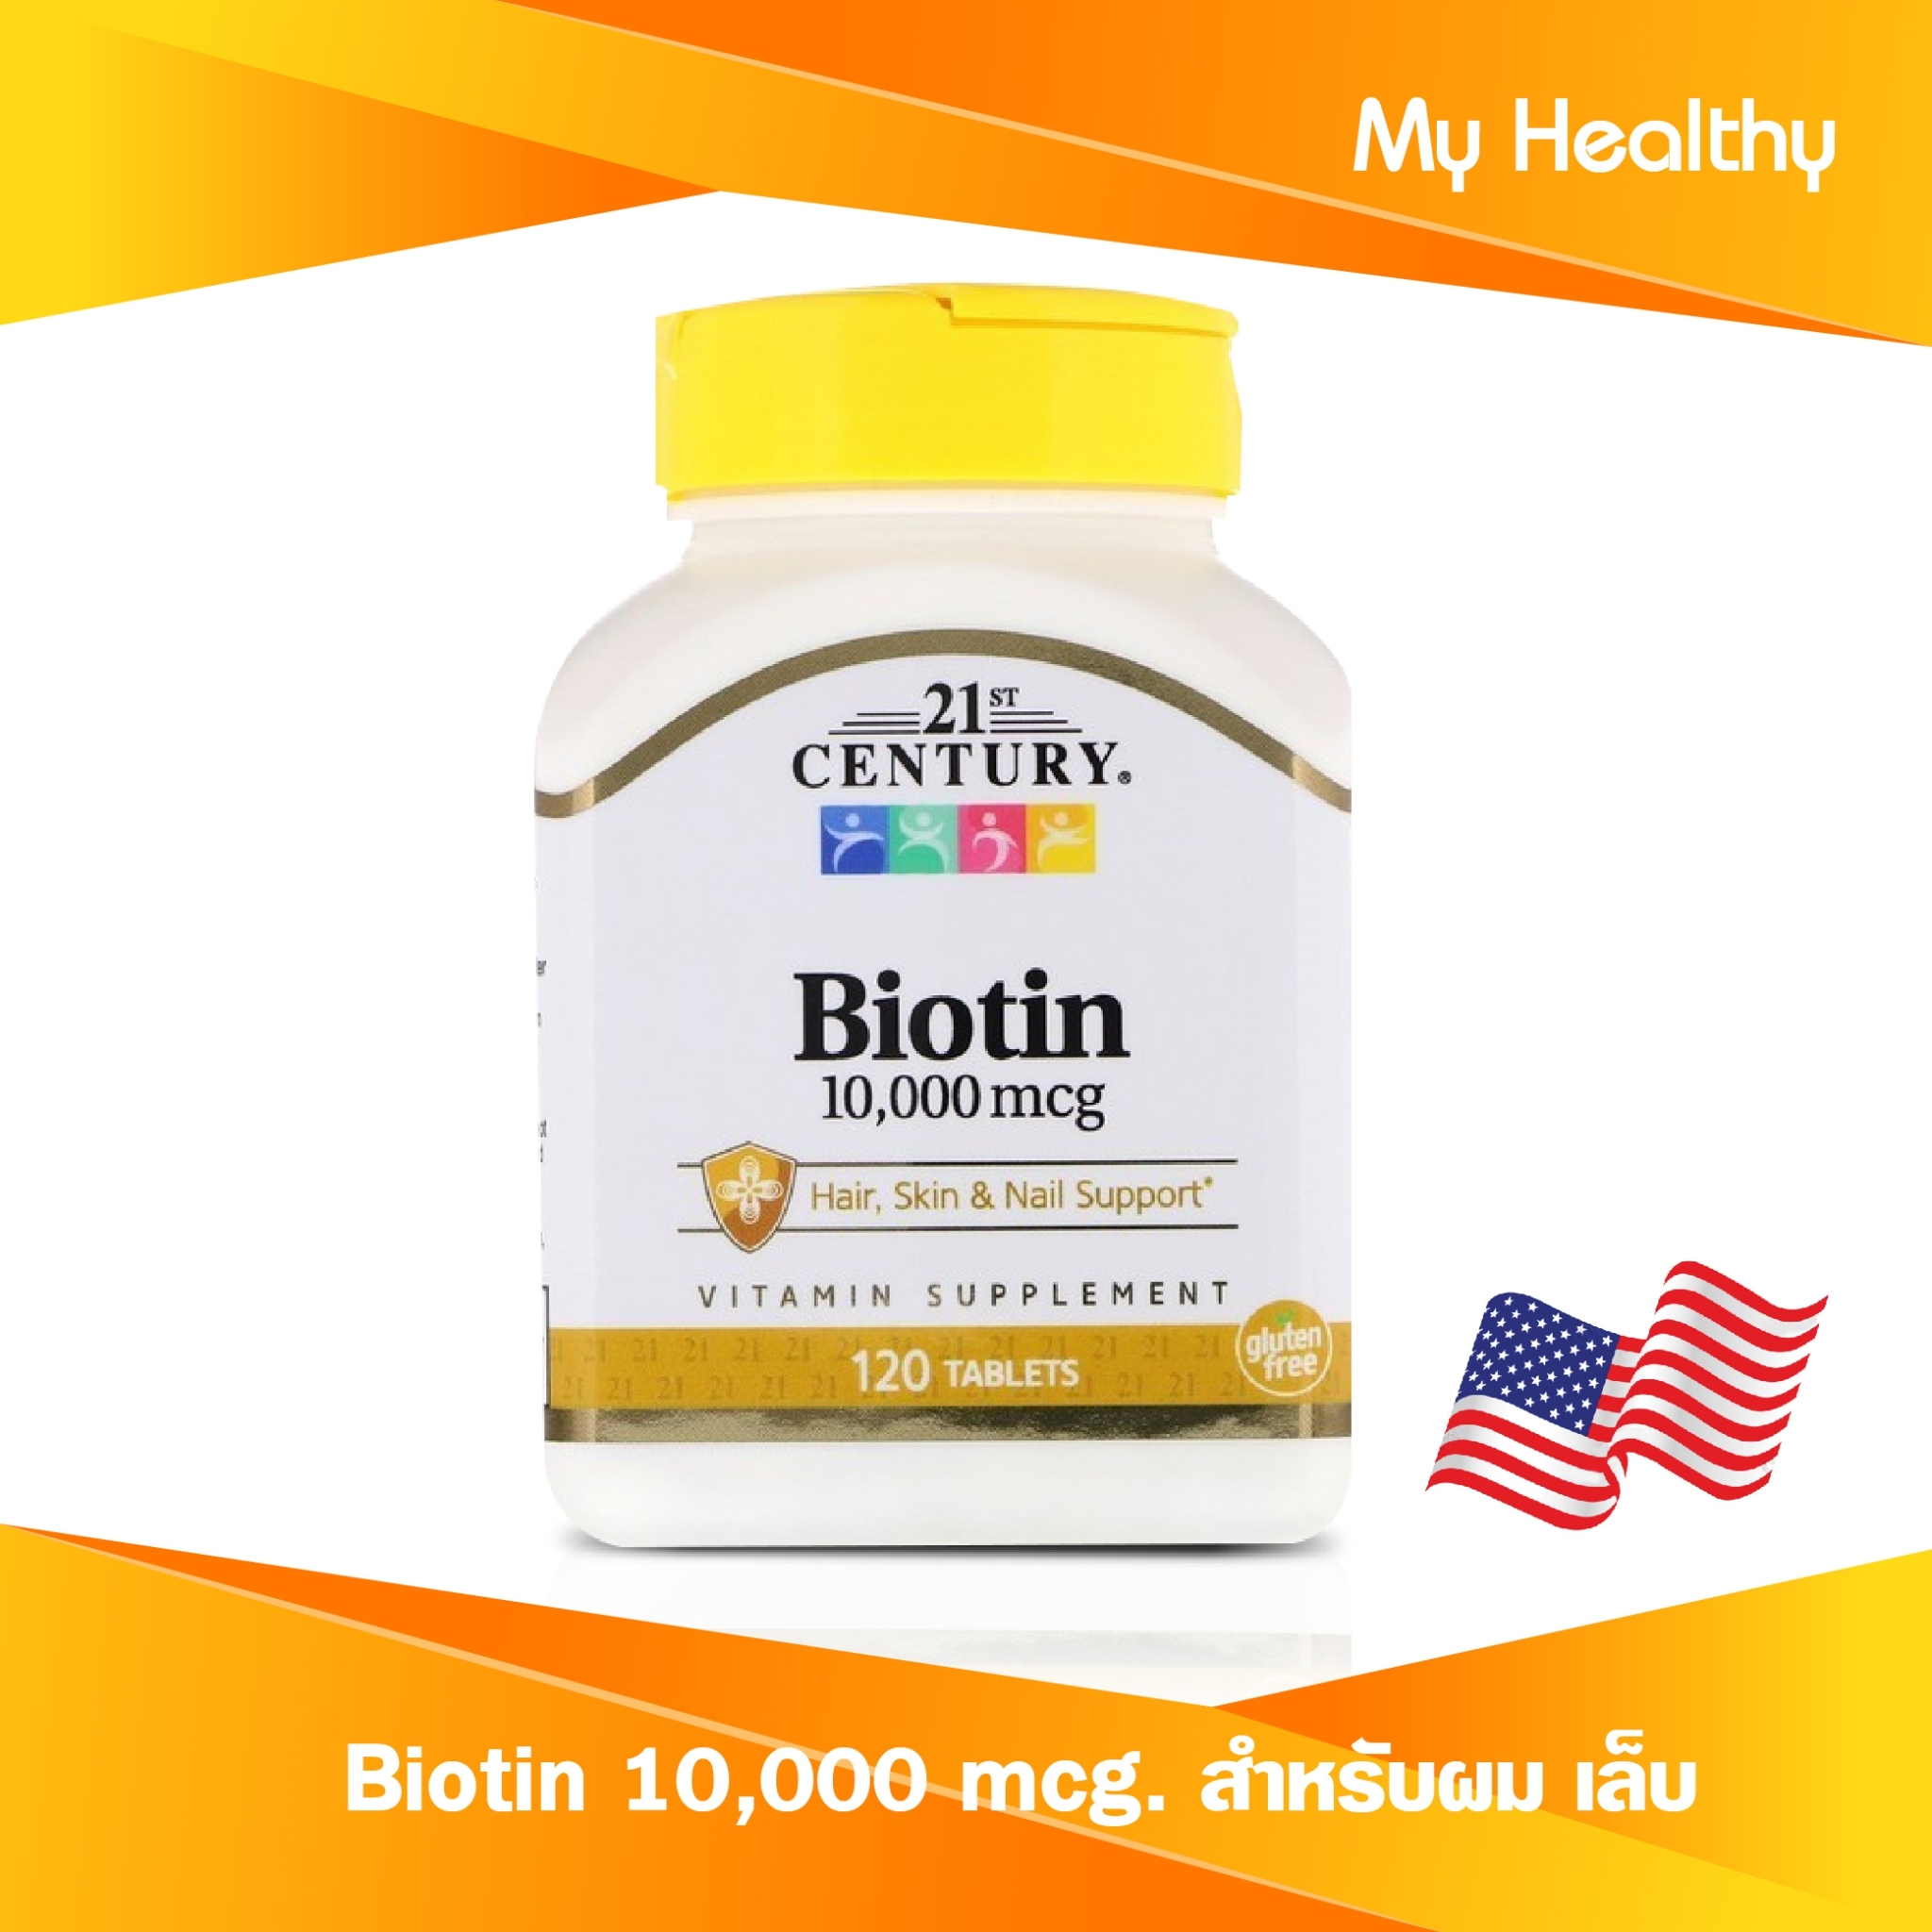 [Exp2022] ไบโอติน USA Biotin ,21st Century 10,000 mcg. 120 เม็ด อาหารเสริมสำหรับผิว ผม เล็บ